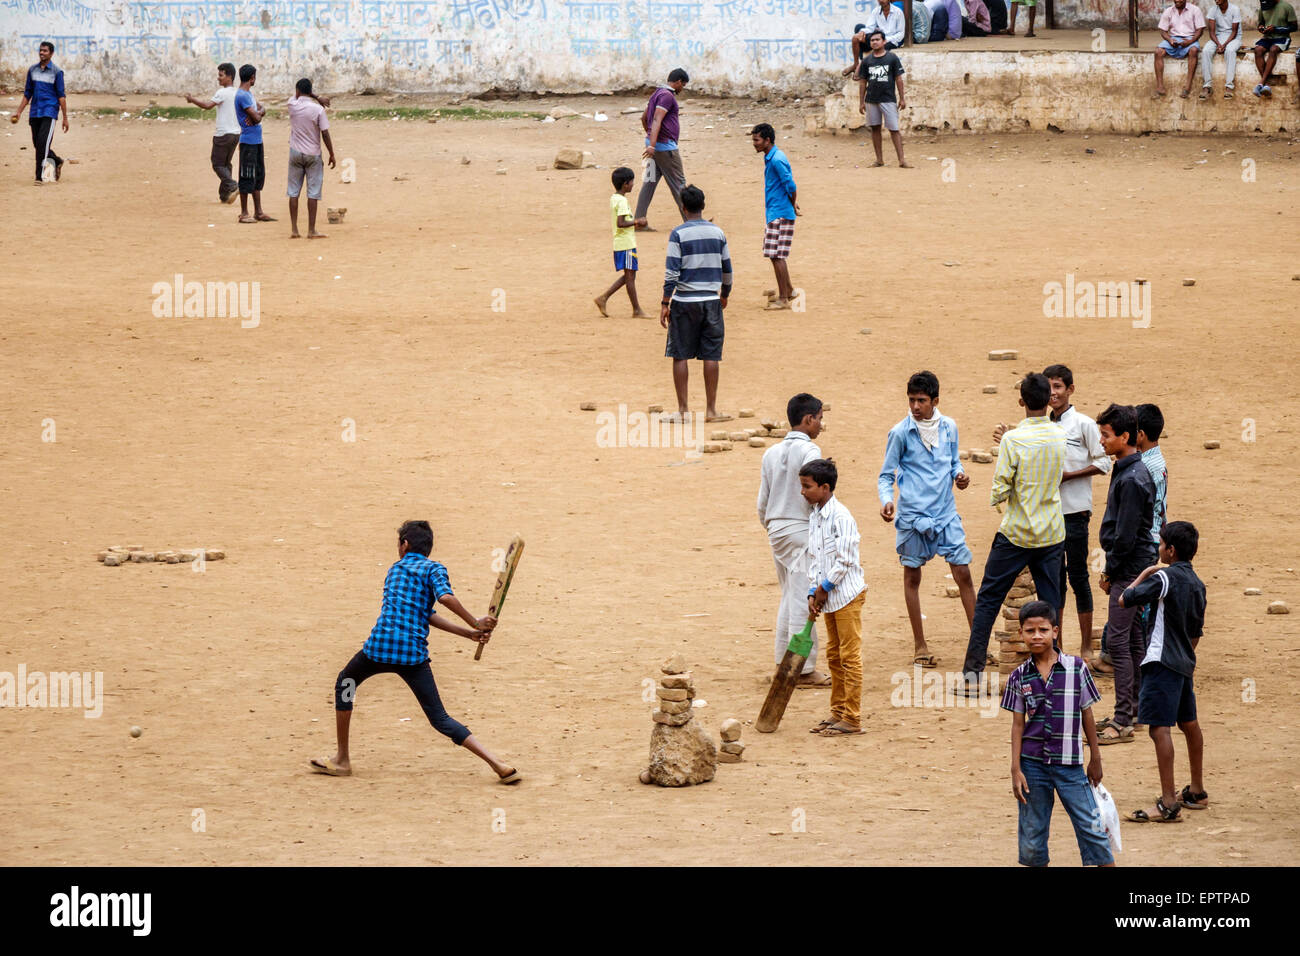 Mumbai India,Indian Asian,Dharavi,Shahu Nagar Road,slum,dirt lot,cricket field pitch,male boy boys lad lads kid kids child children,friends,playing,vi Stock Photo